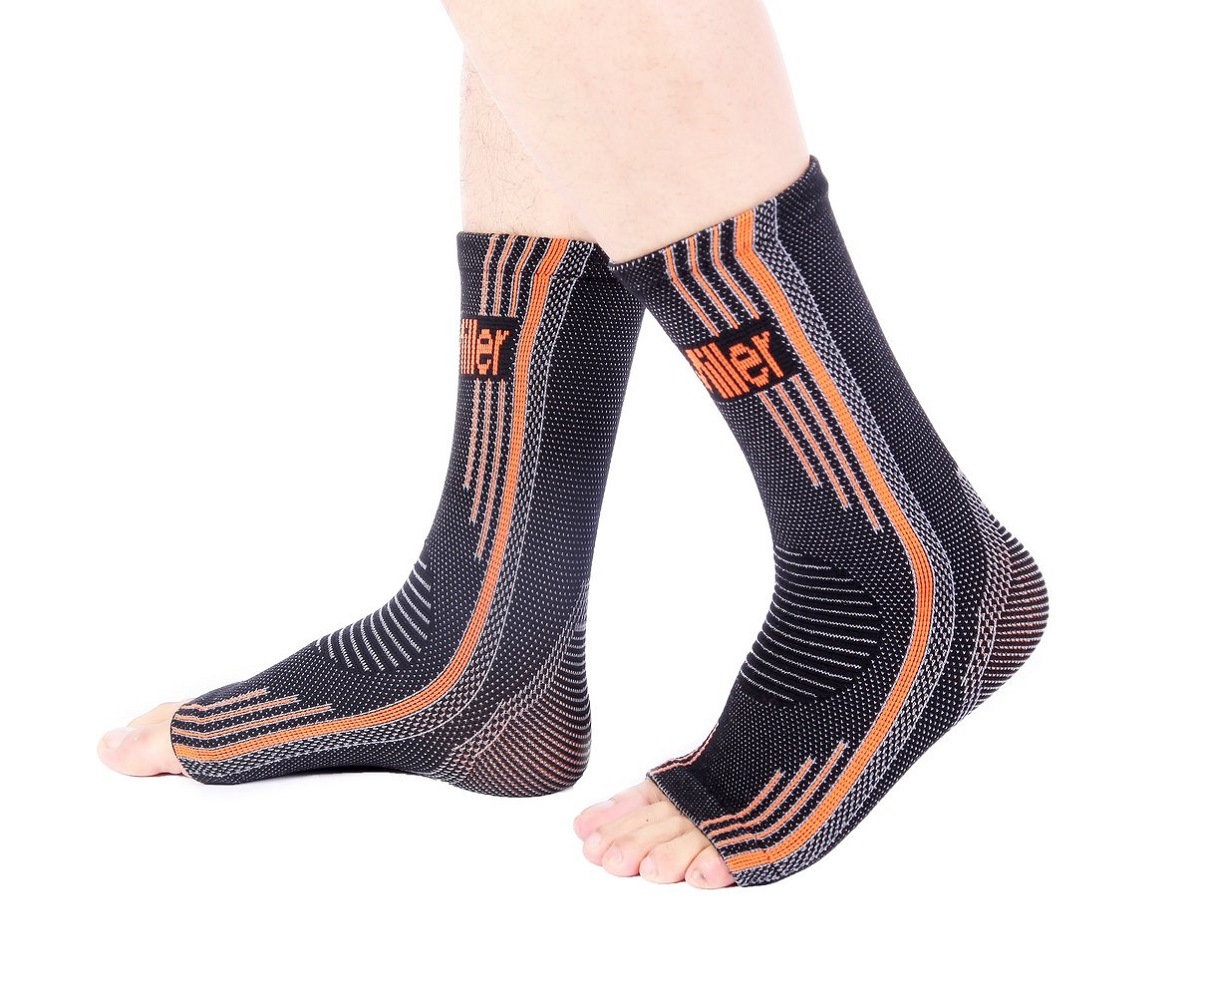 Doc Miller Premium Ankle Brace Compression Support Sleeve Socks(Orange, Medium)